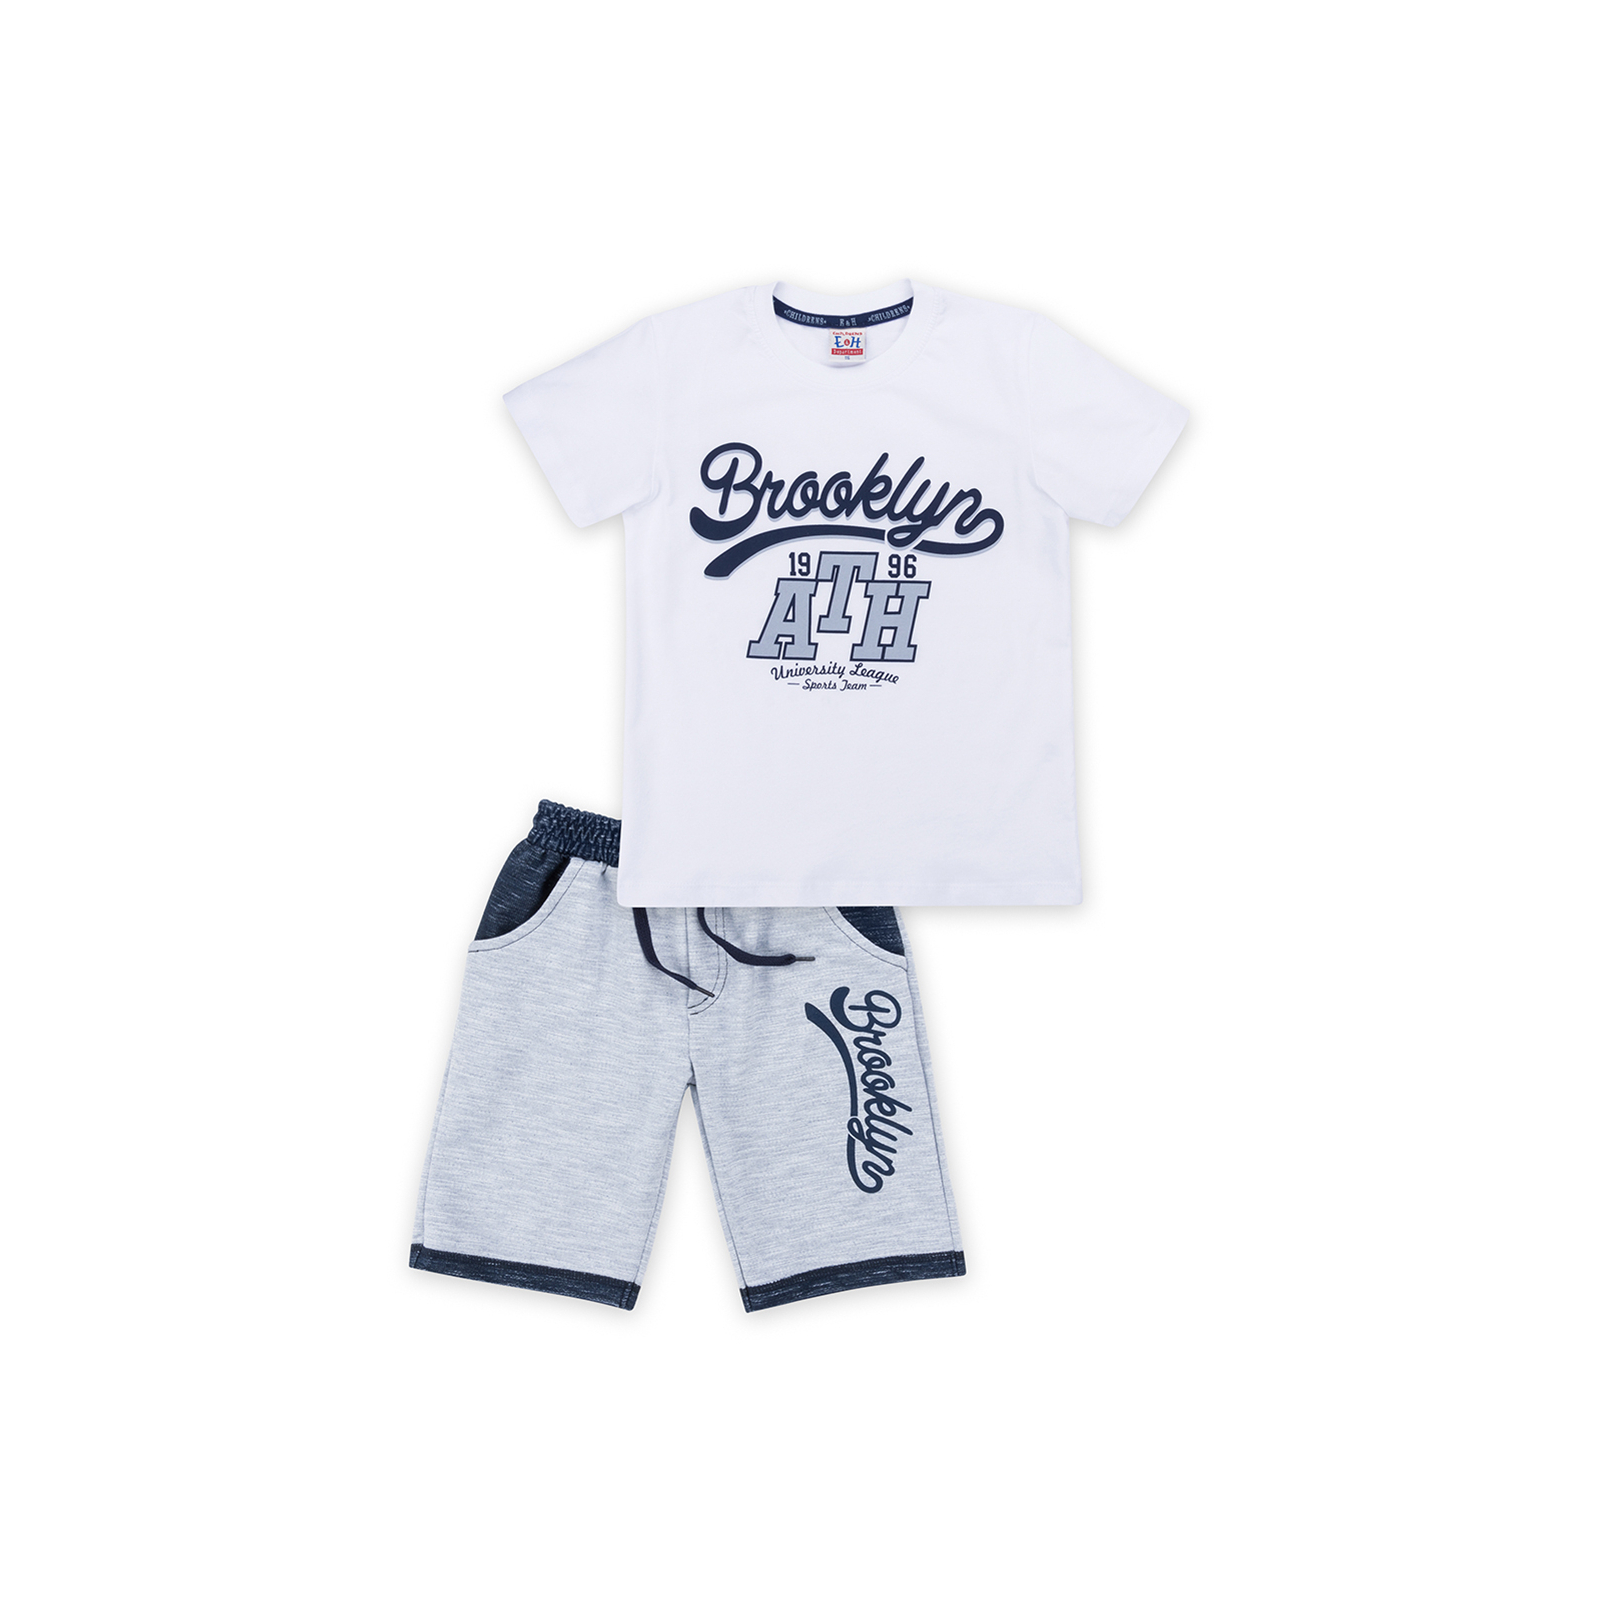 Набор детской одежды Breeze футболка "Brooklyn ATH" с шортами (8932-128B-white)